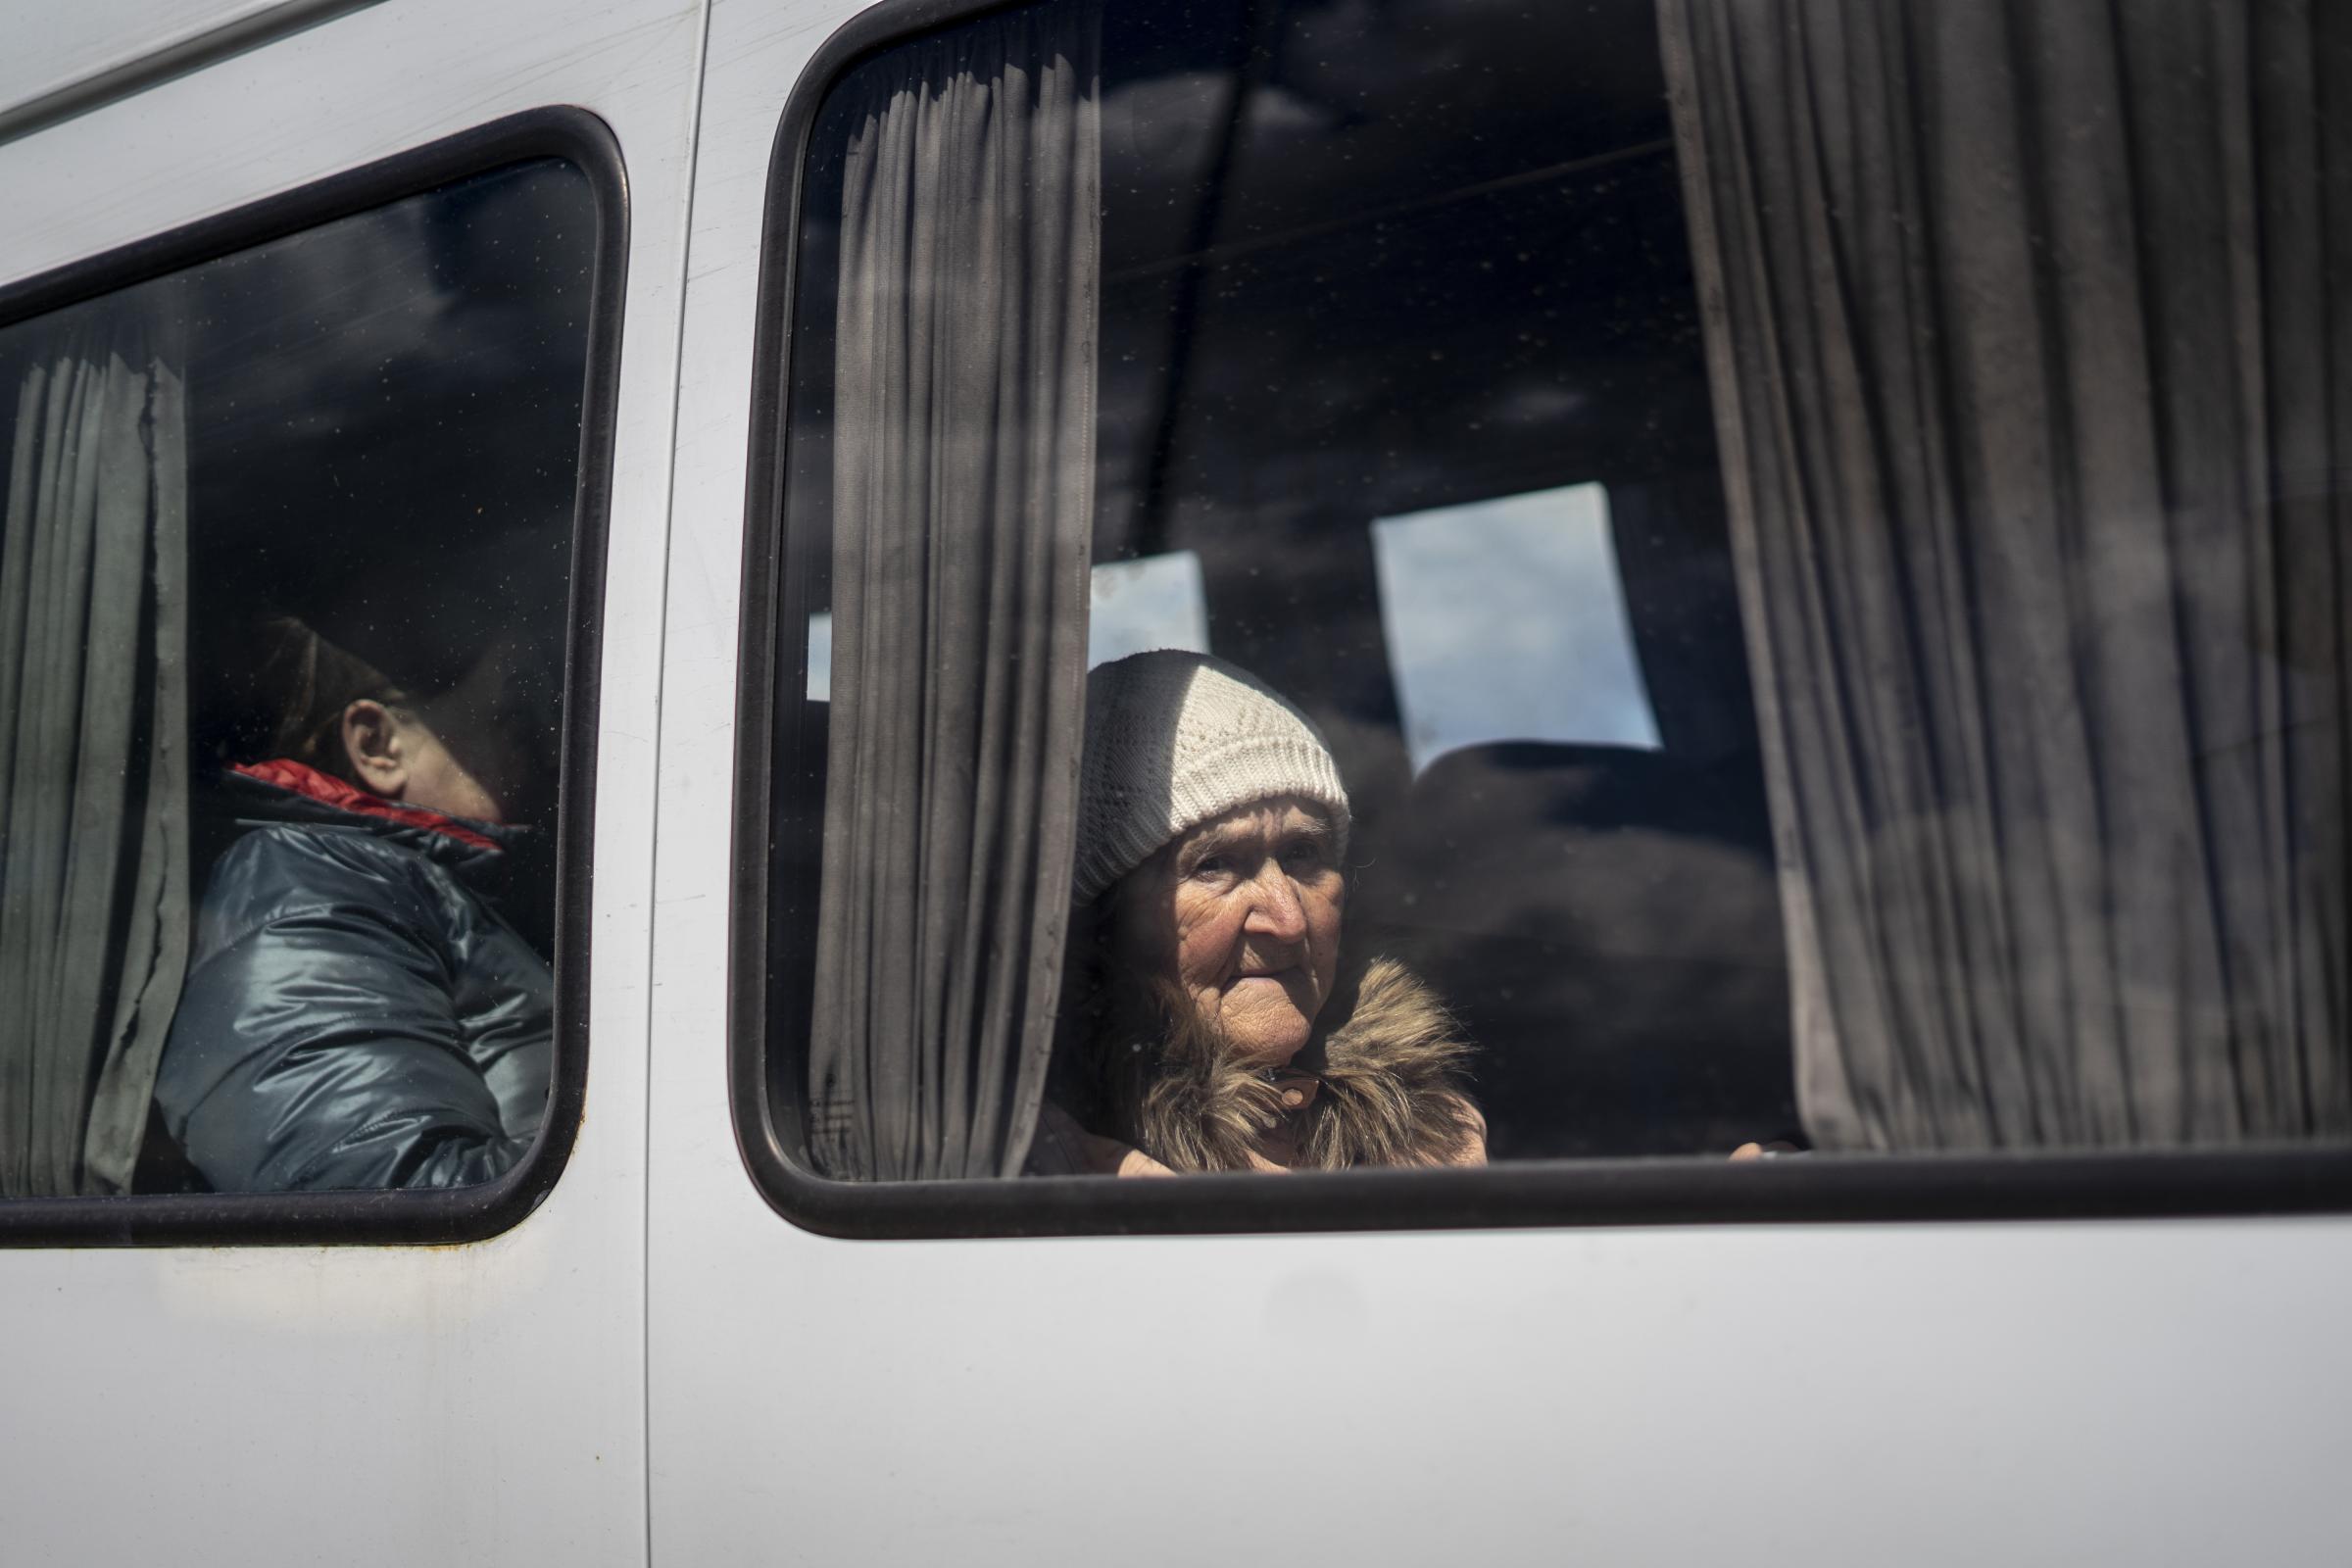 Moldova welcomes Ukrainian fleeing the war - 